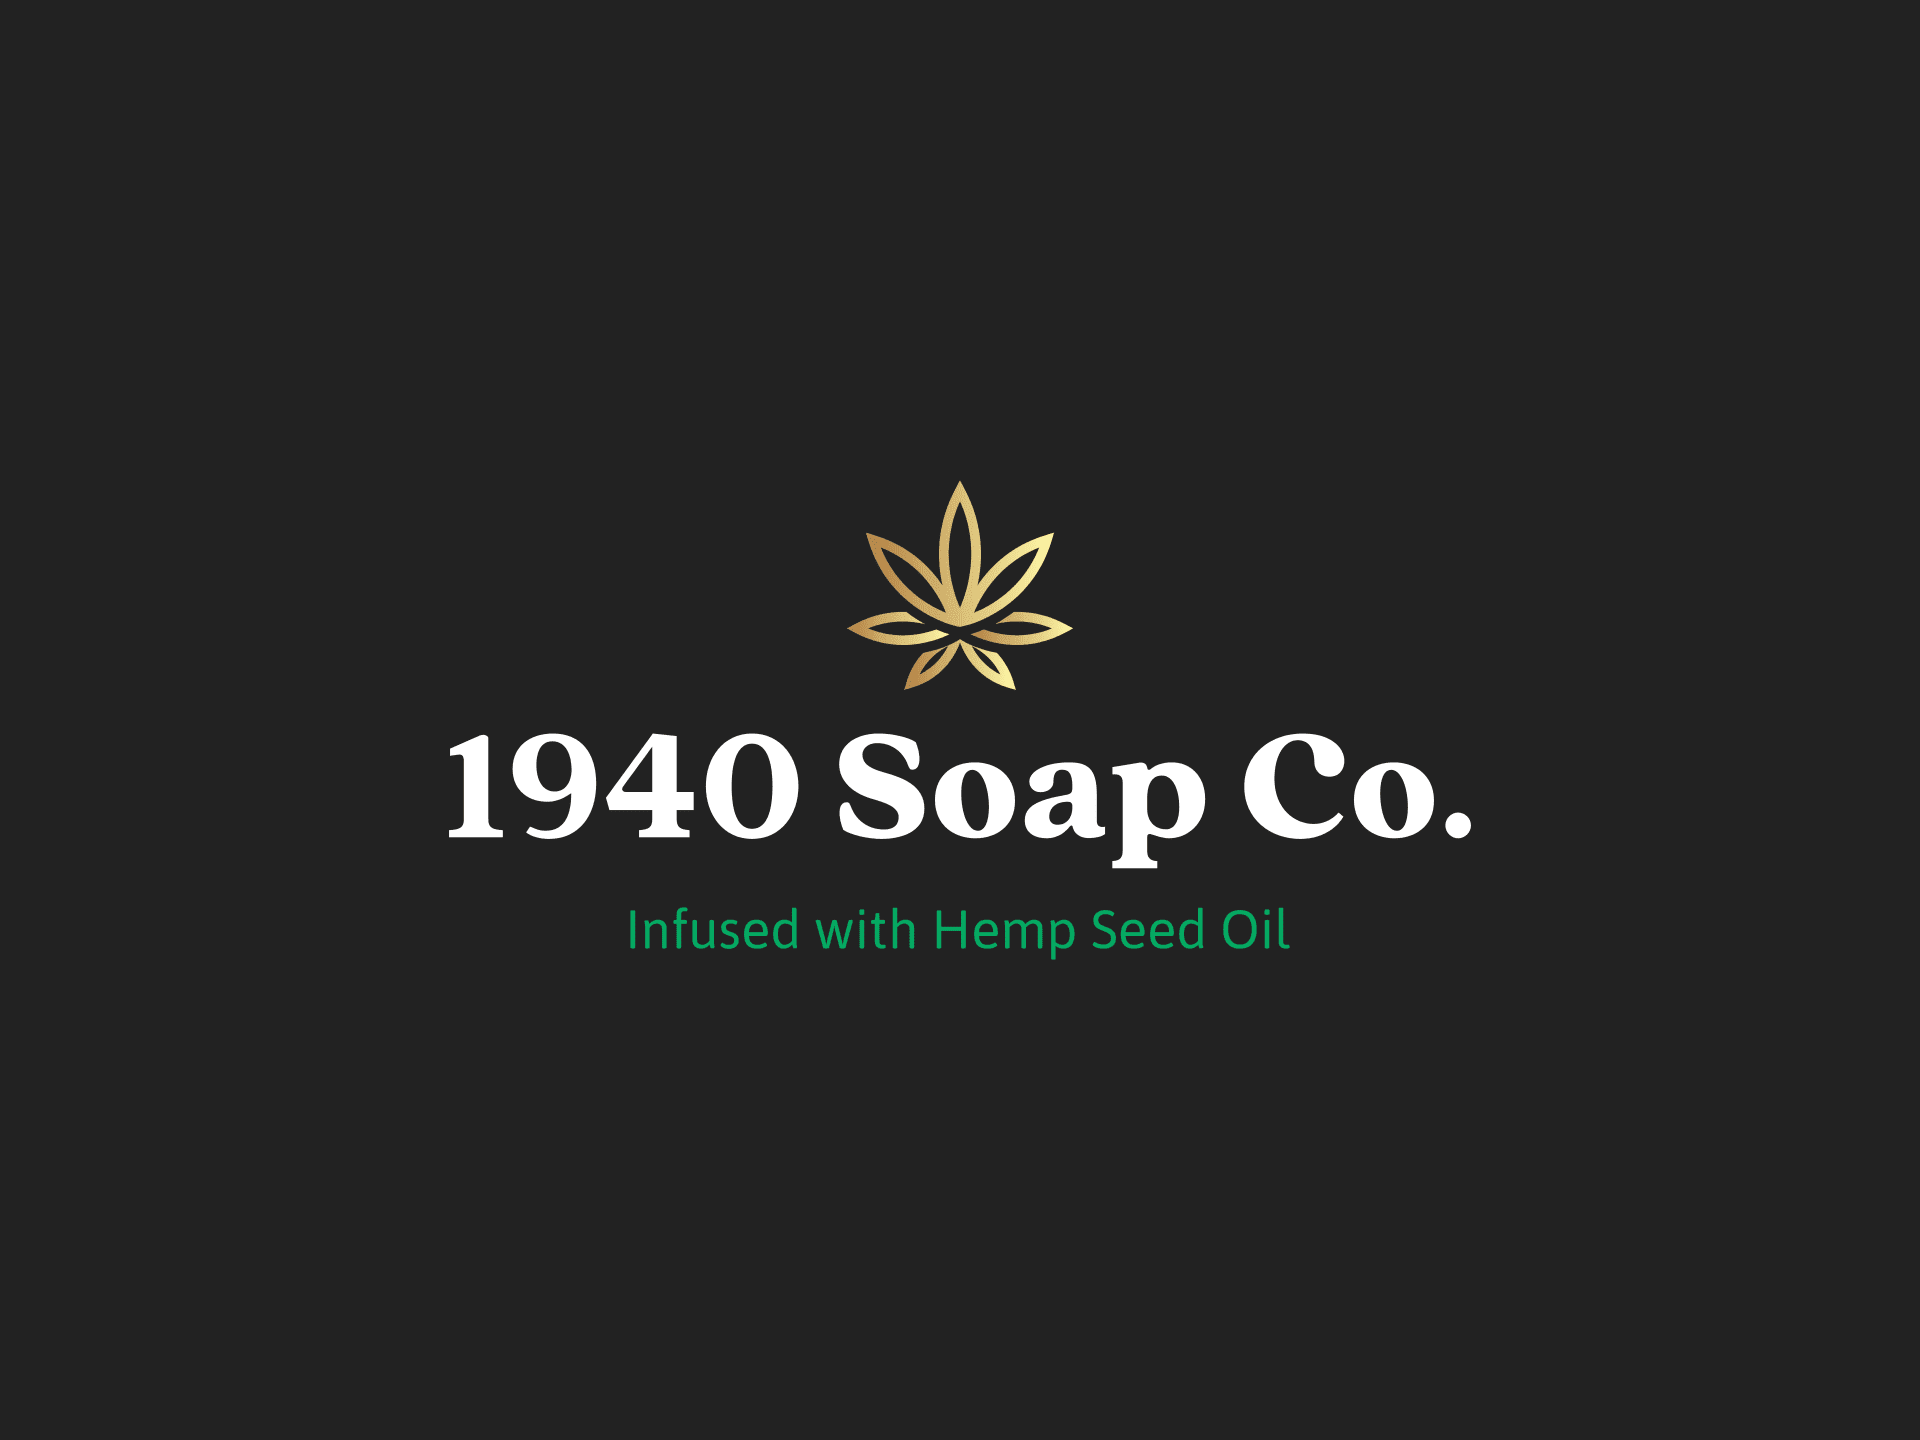 1940 Soap Co.